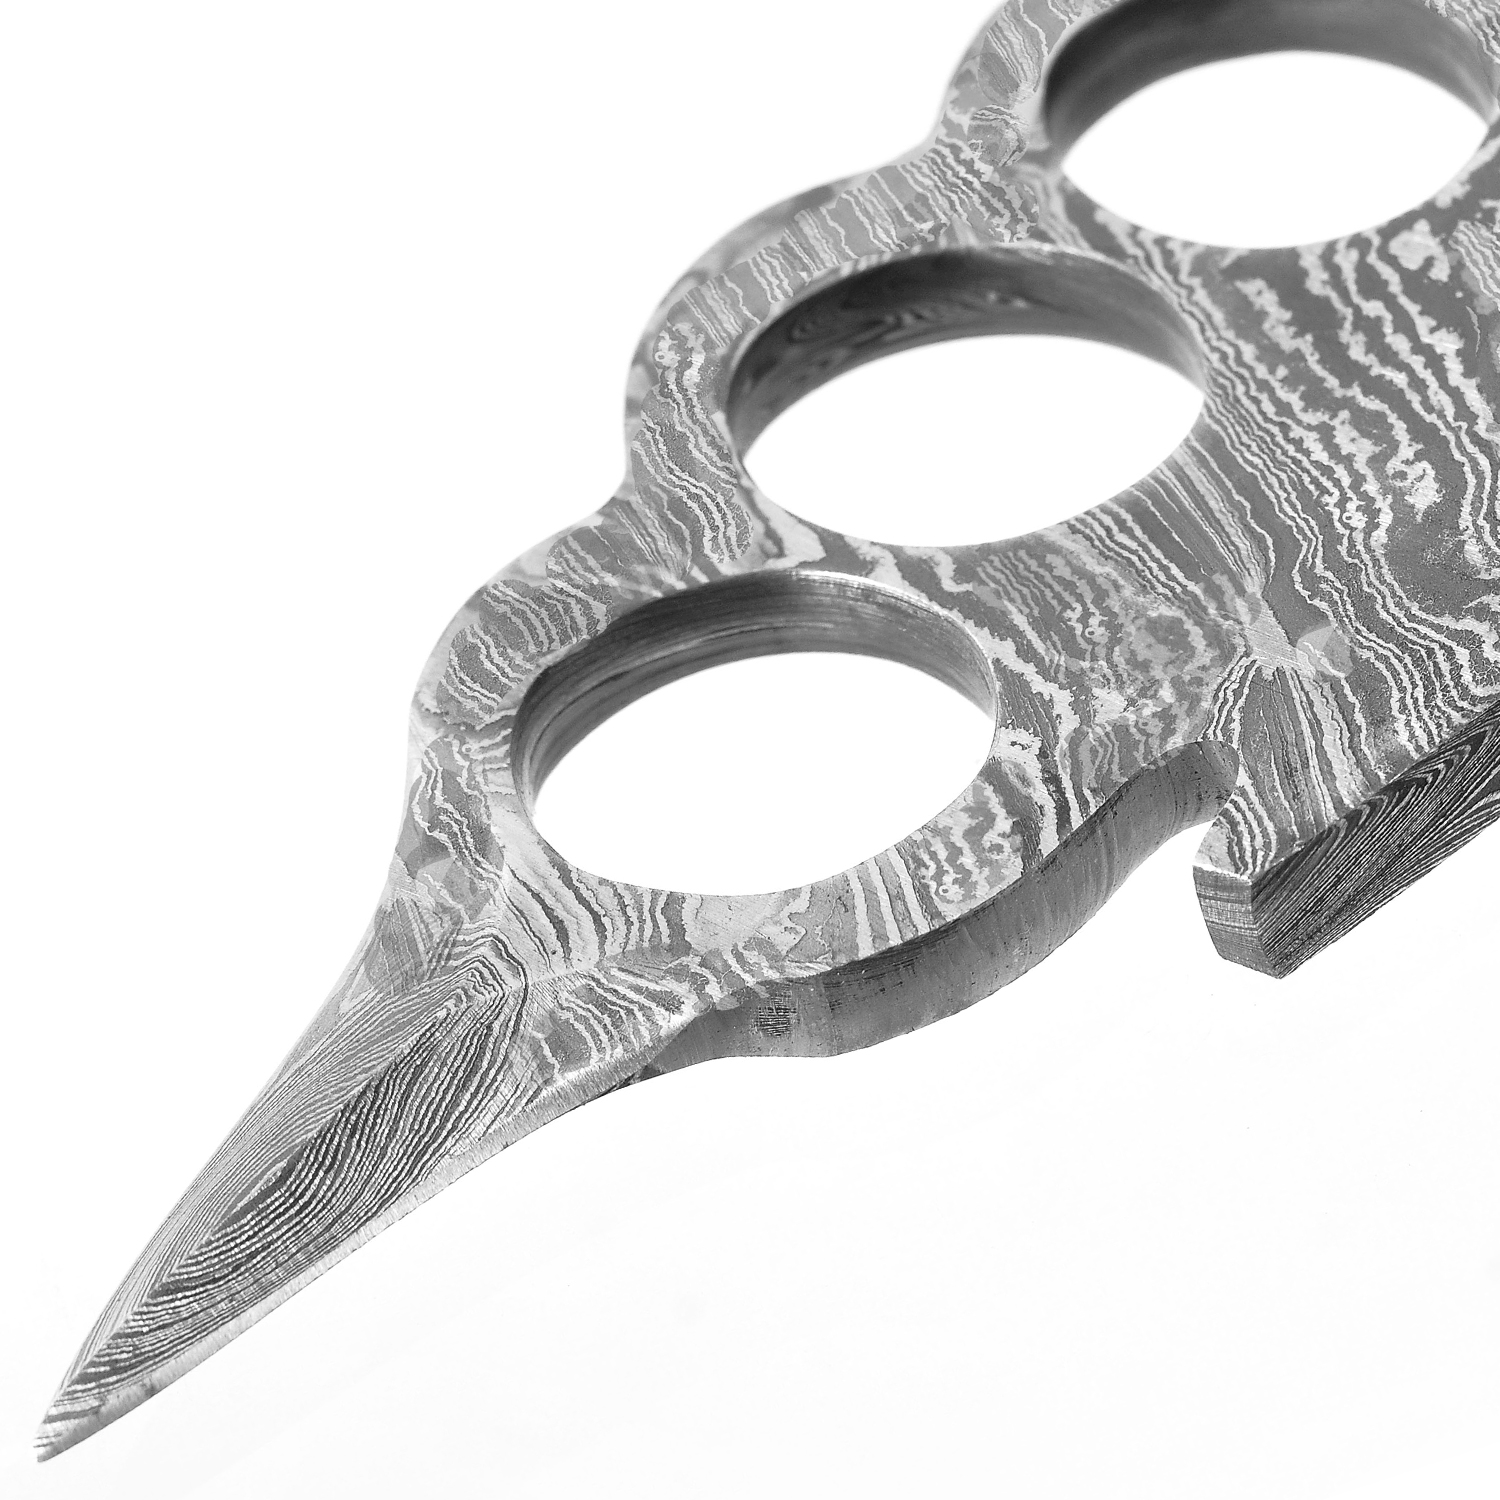 Damascus Steel Brass Knuckle Knife Dagger